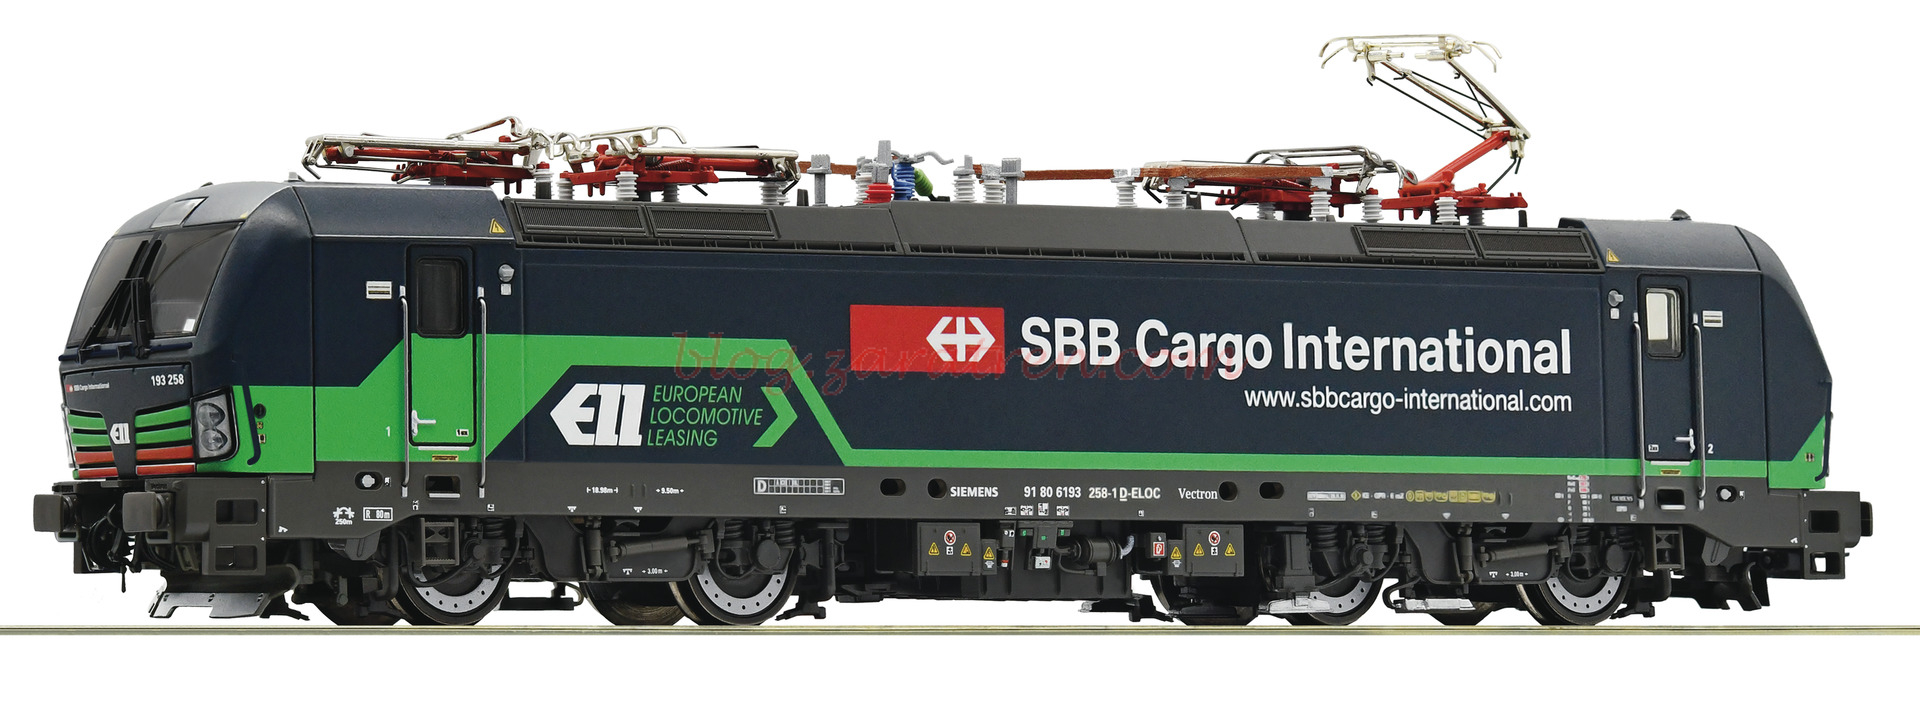 Roco – Maquina electrica SBB Cargo International 193 258-1, D.Sonido, Escala H0, Ref: 71955